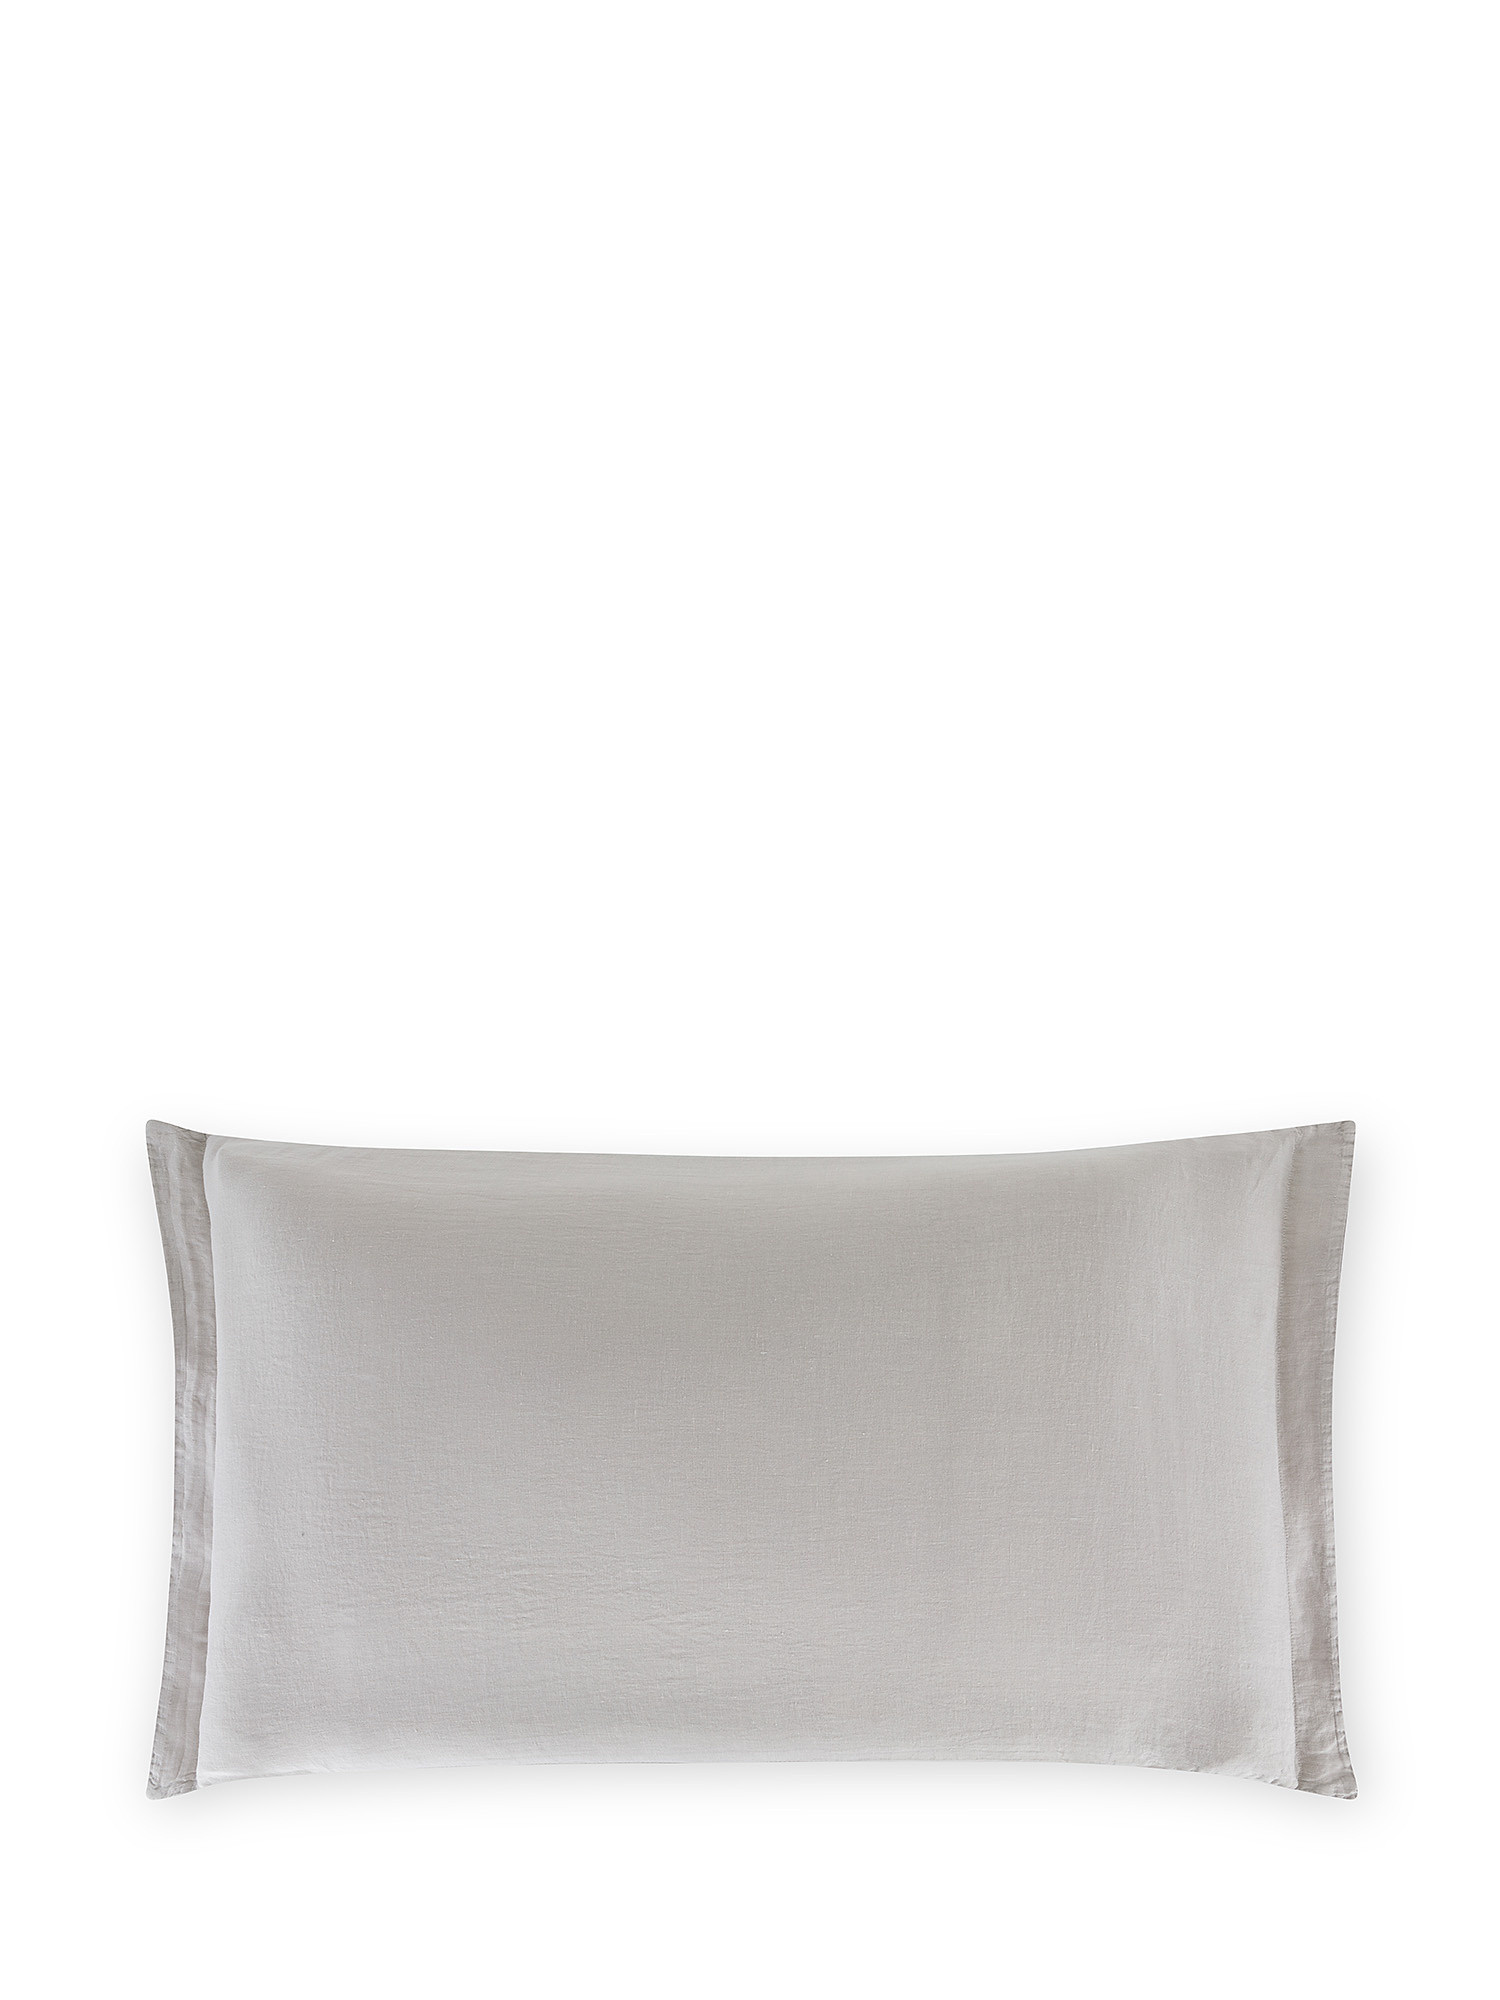 Zefiro plain color linen and cotton pillowcase, Light Grey, large image number 0